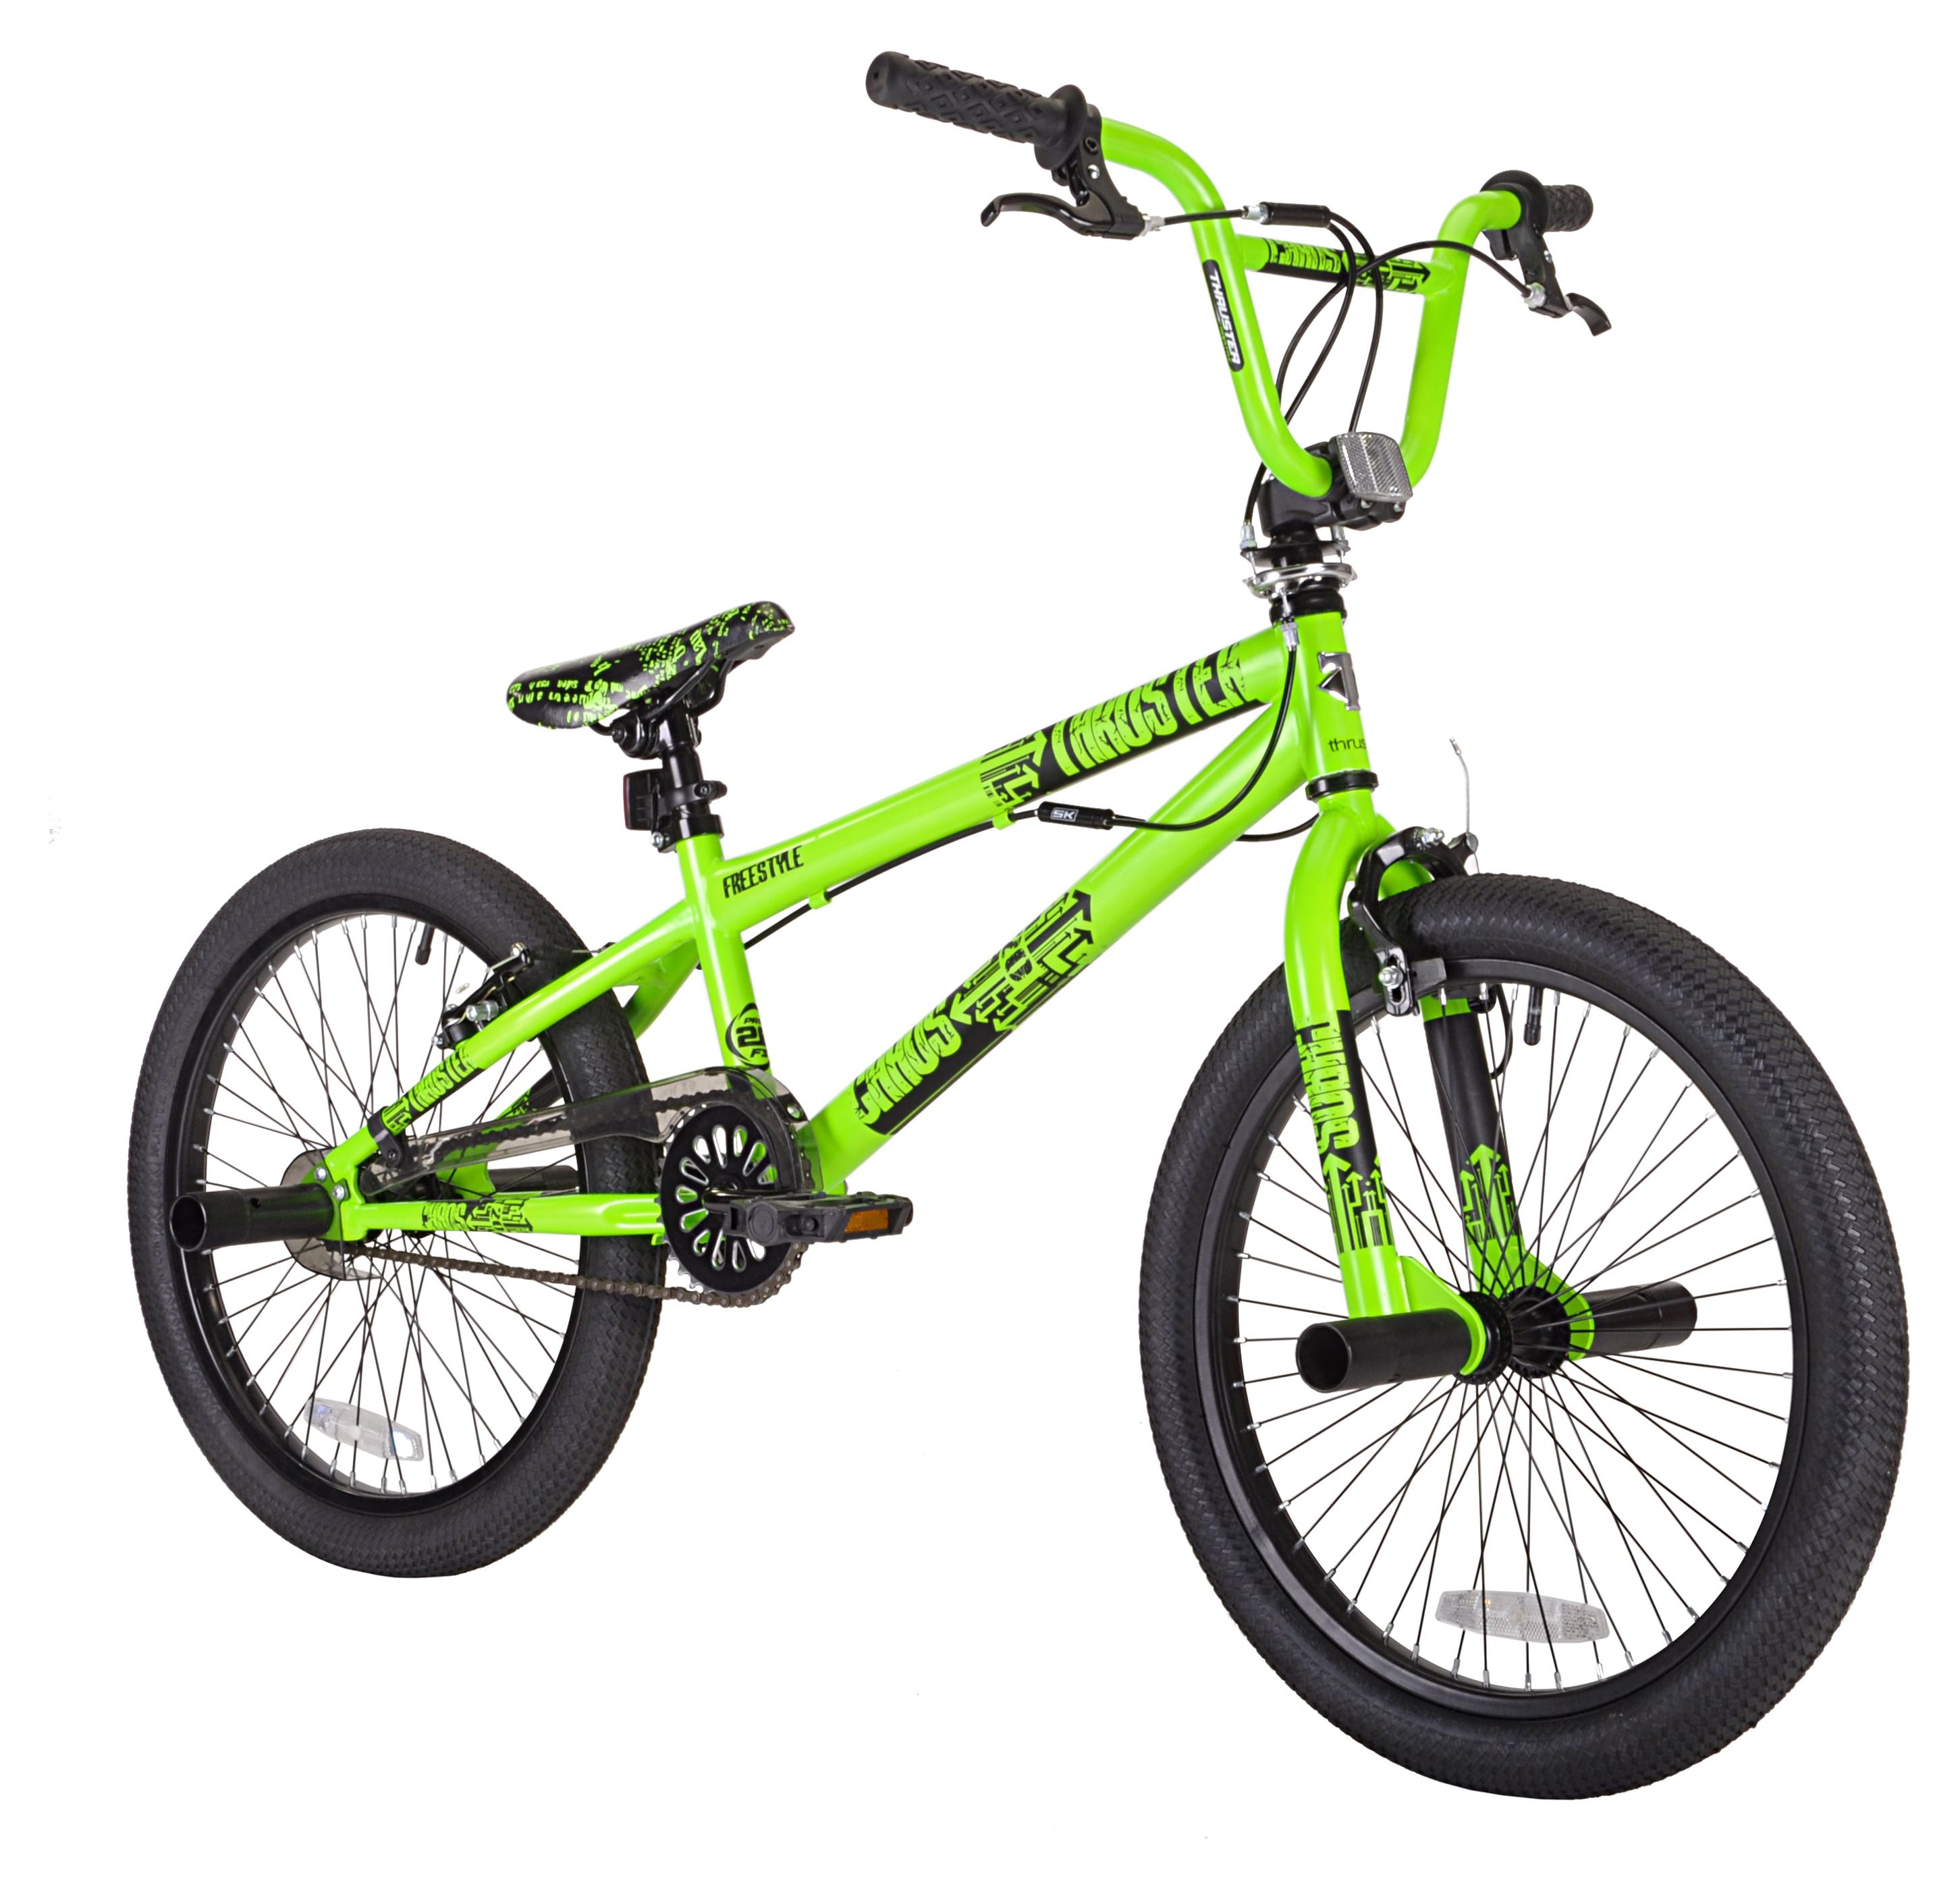 Kent 20" Thruster Chaos BMX Boy's Bike, Green - image 4 of 10